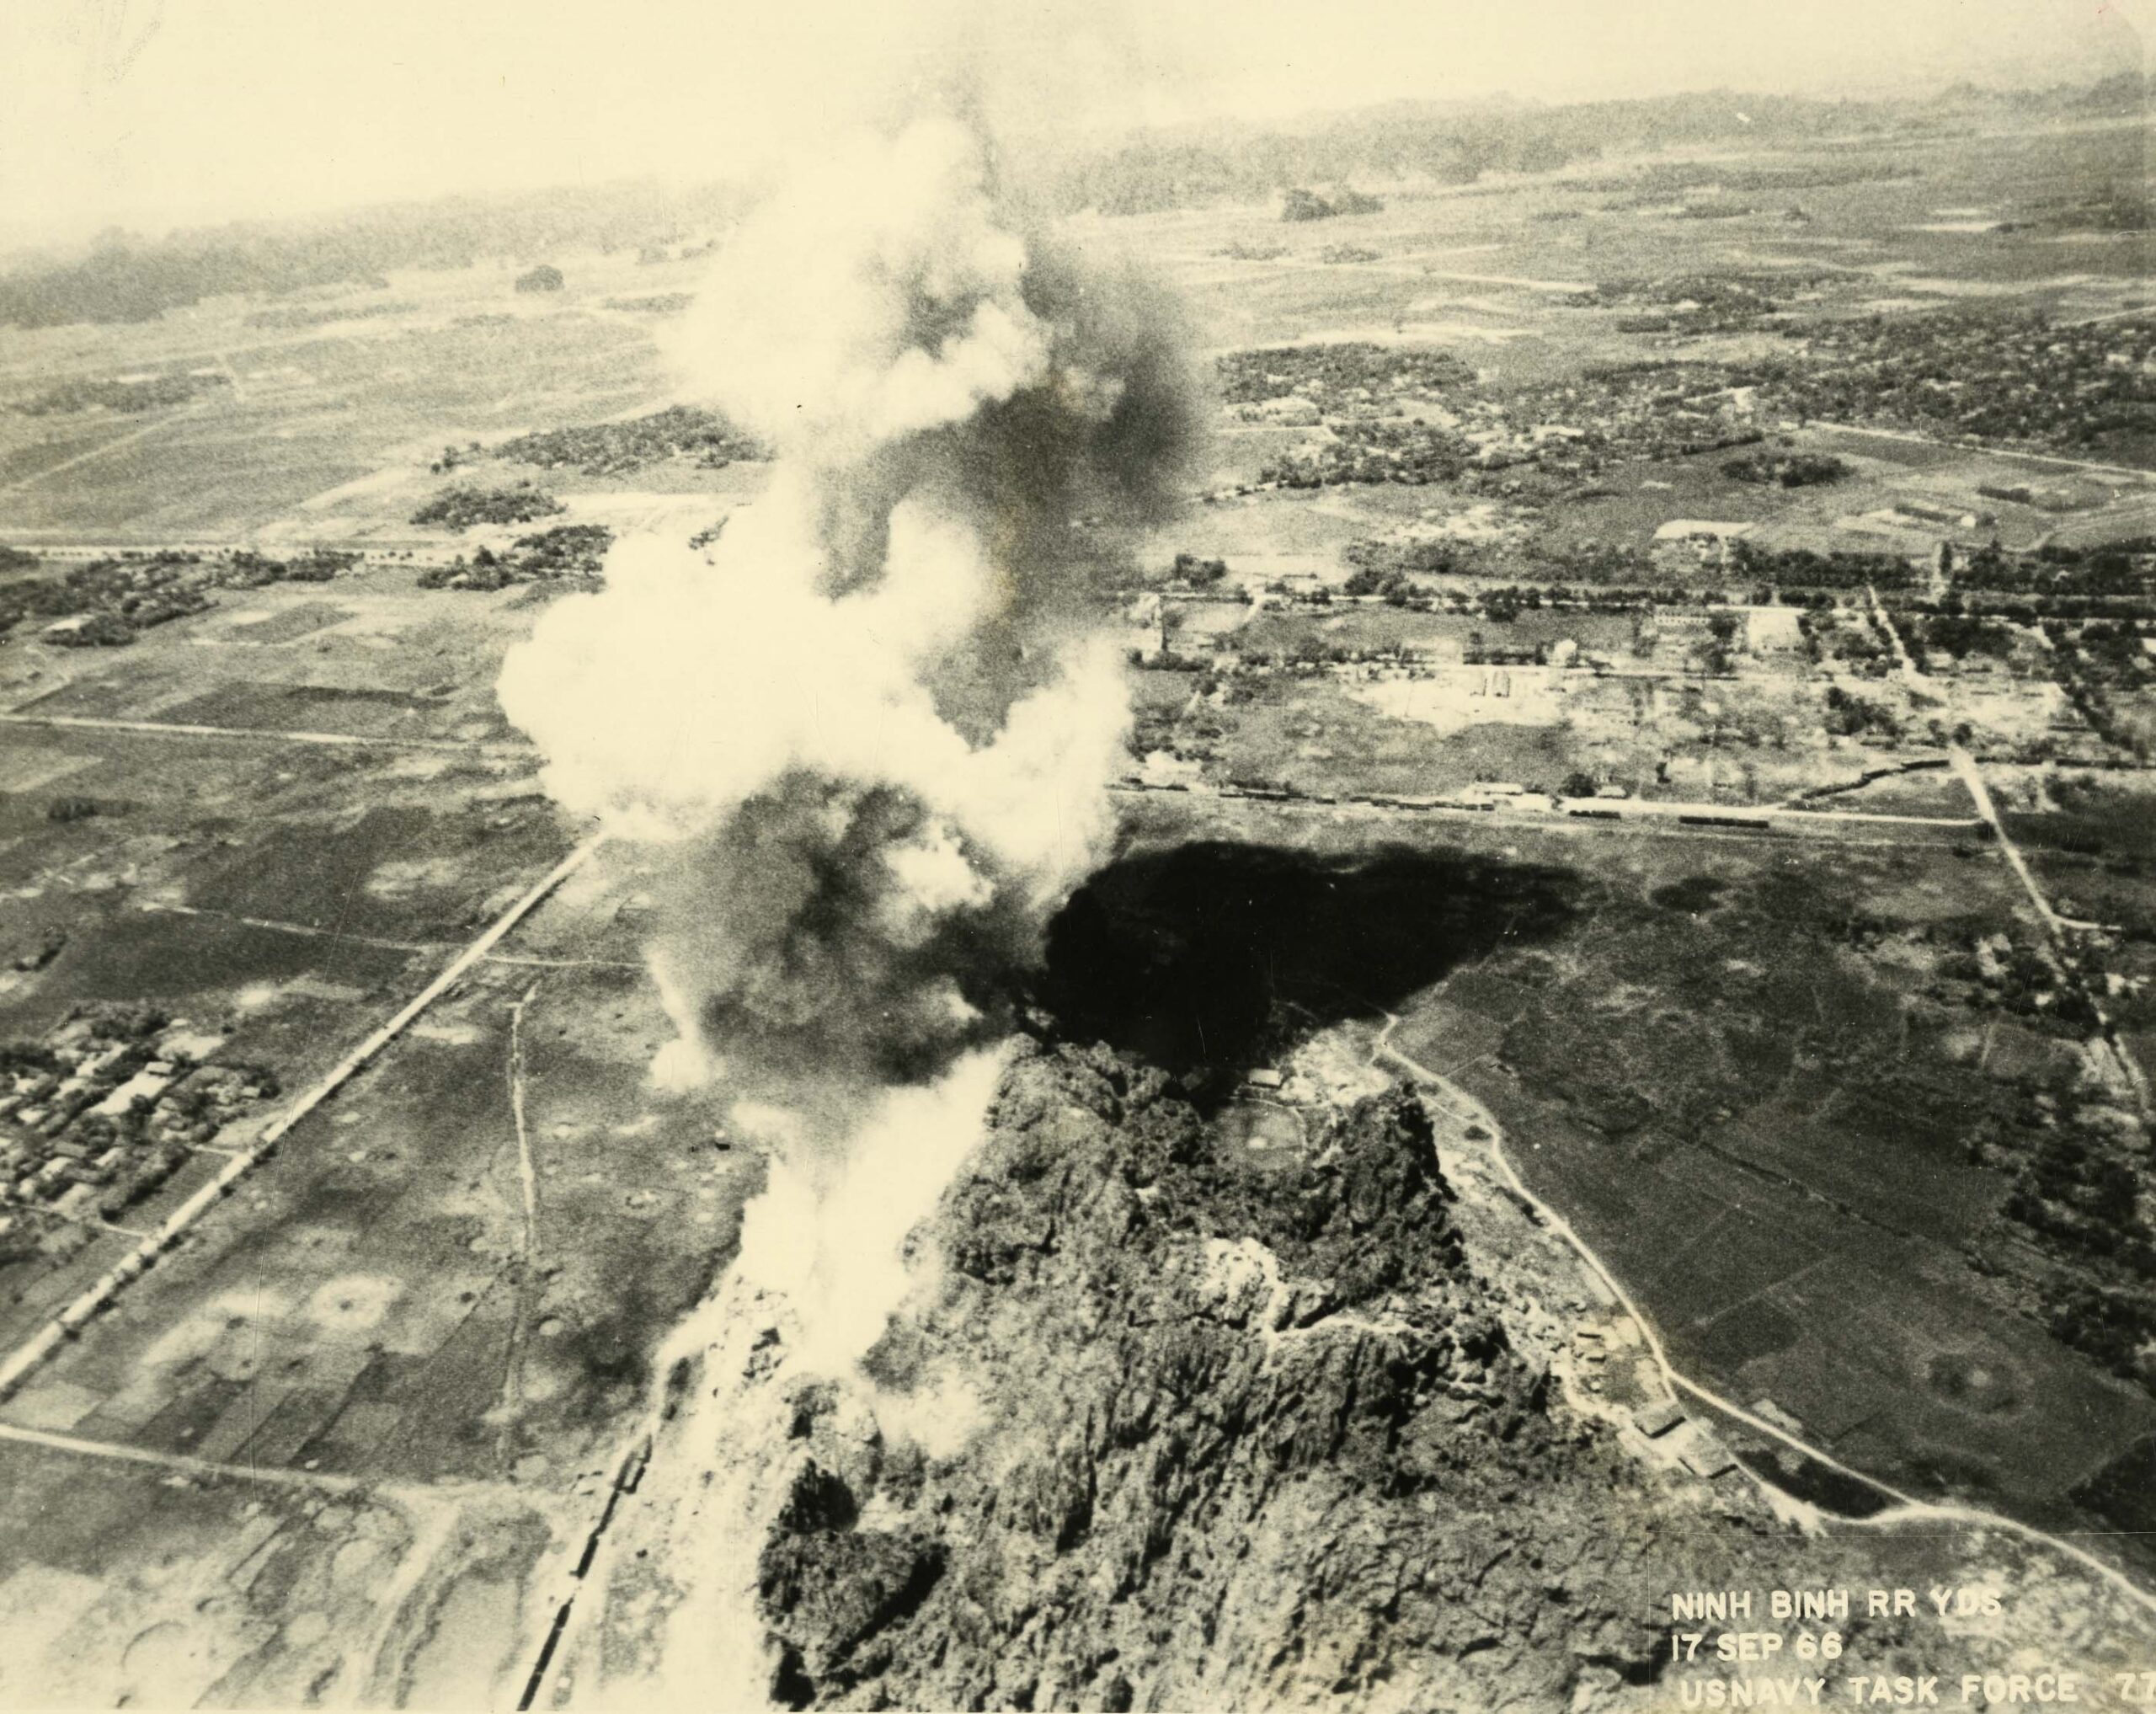 Aerial photo of a bombing of Ninh Binh railway